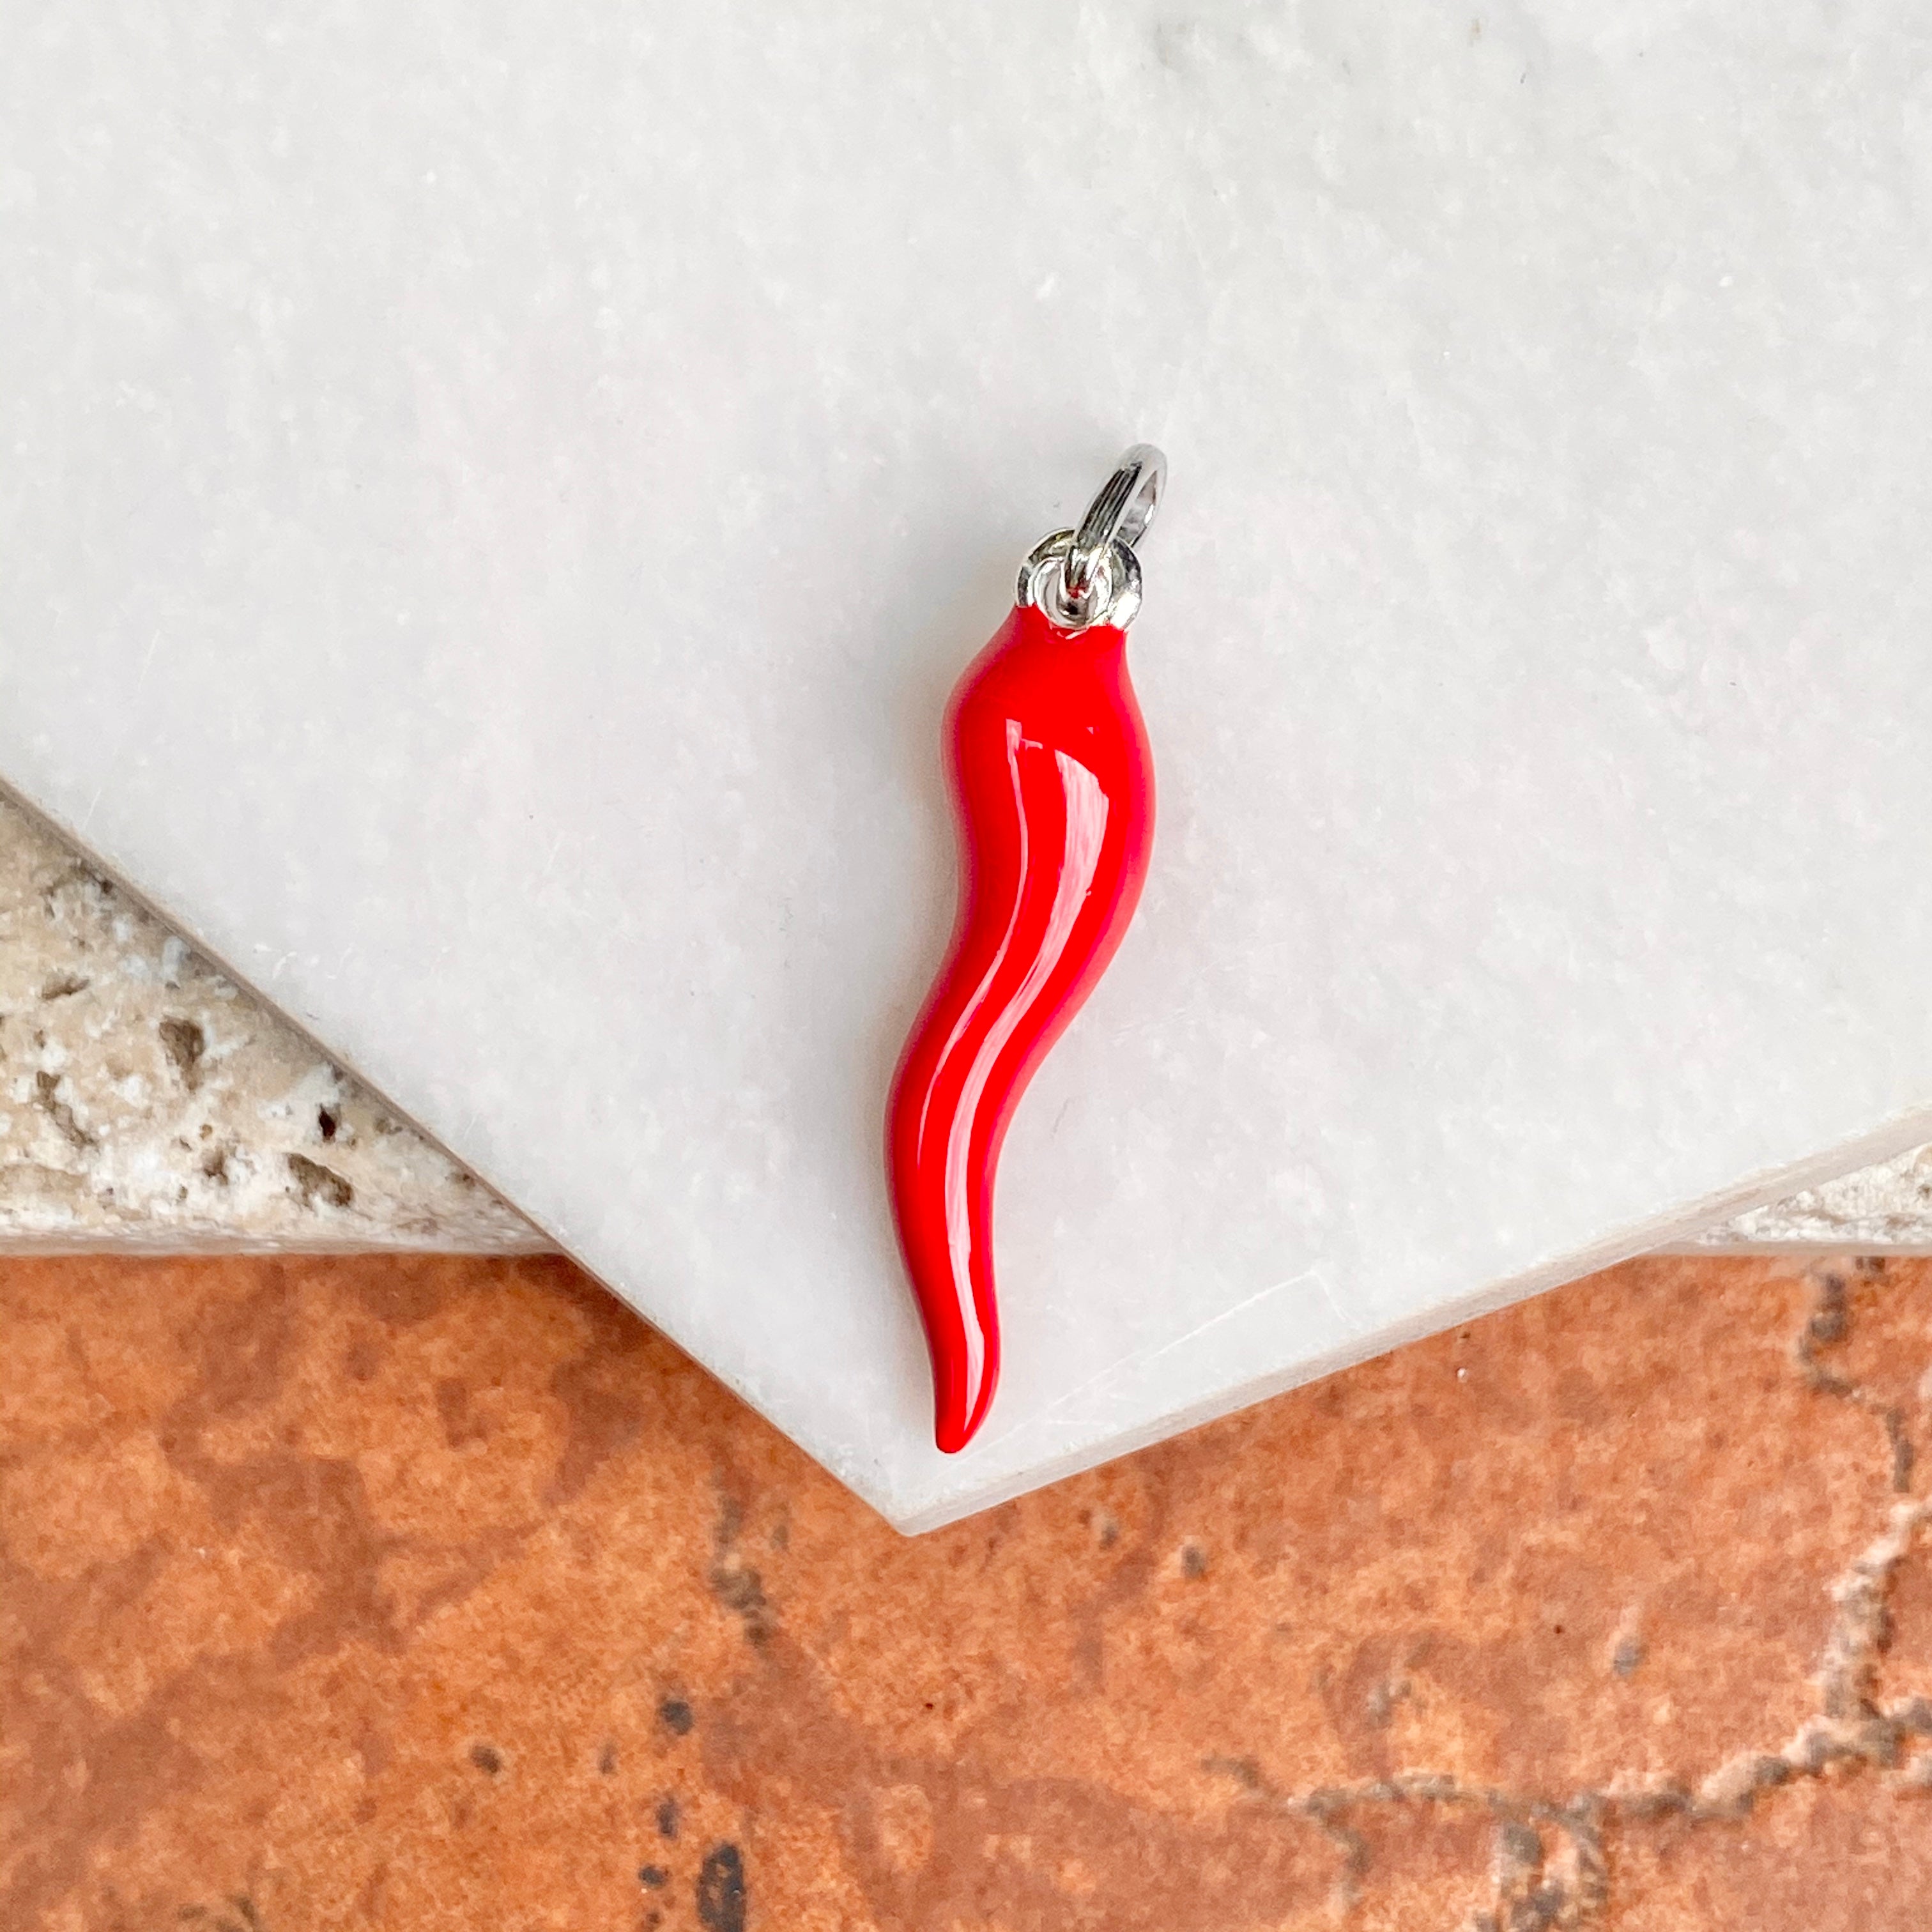 Gioielli Dop: Elastic Boule Bracelet with Charm Mini Chili Pepper Lucky  Charm in Sterling Silver and Red Enamel | L'Italo-Americano – Italian  American bilingual news source